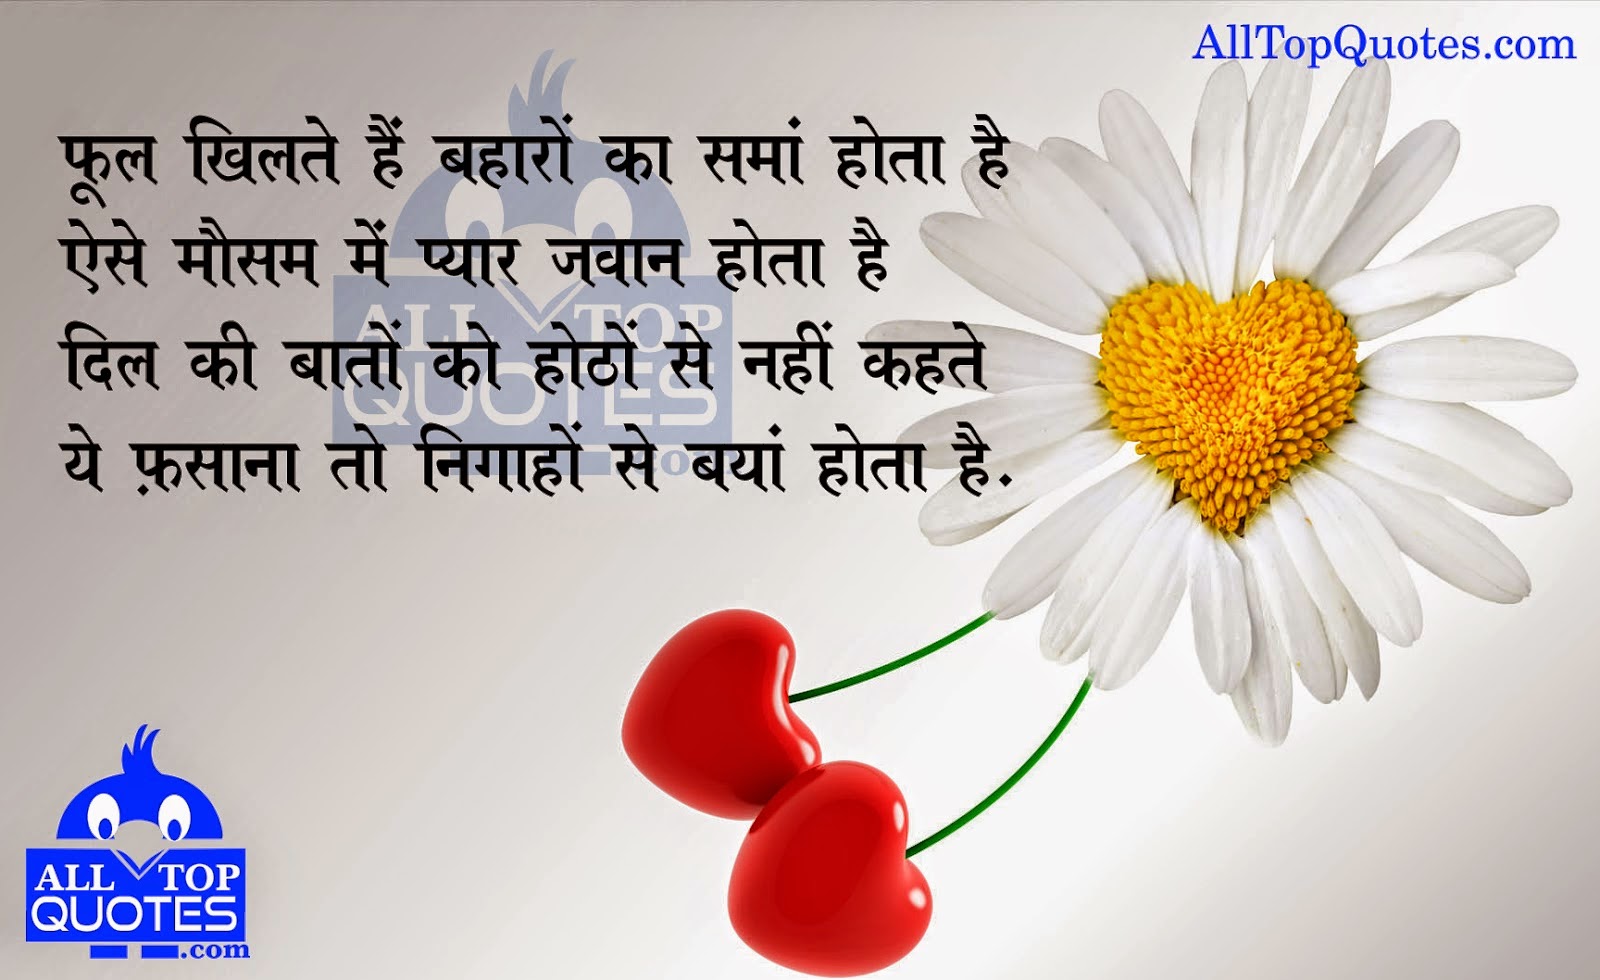 Hindi Love And Romantic Shayari In Hindi Font Share This Romantic Hindi Quote With Your Dear One